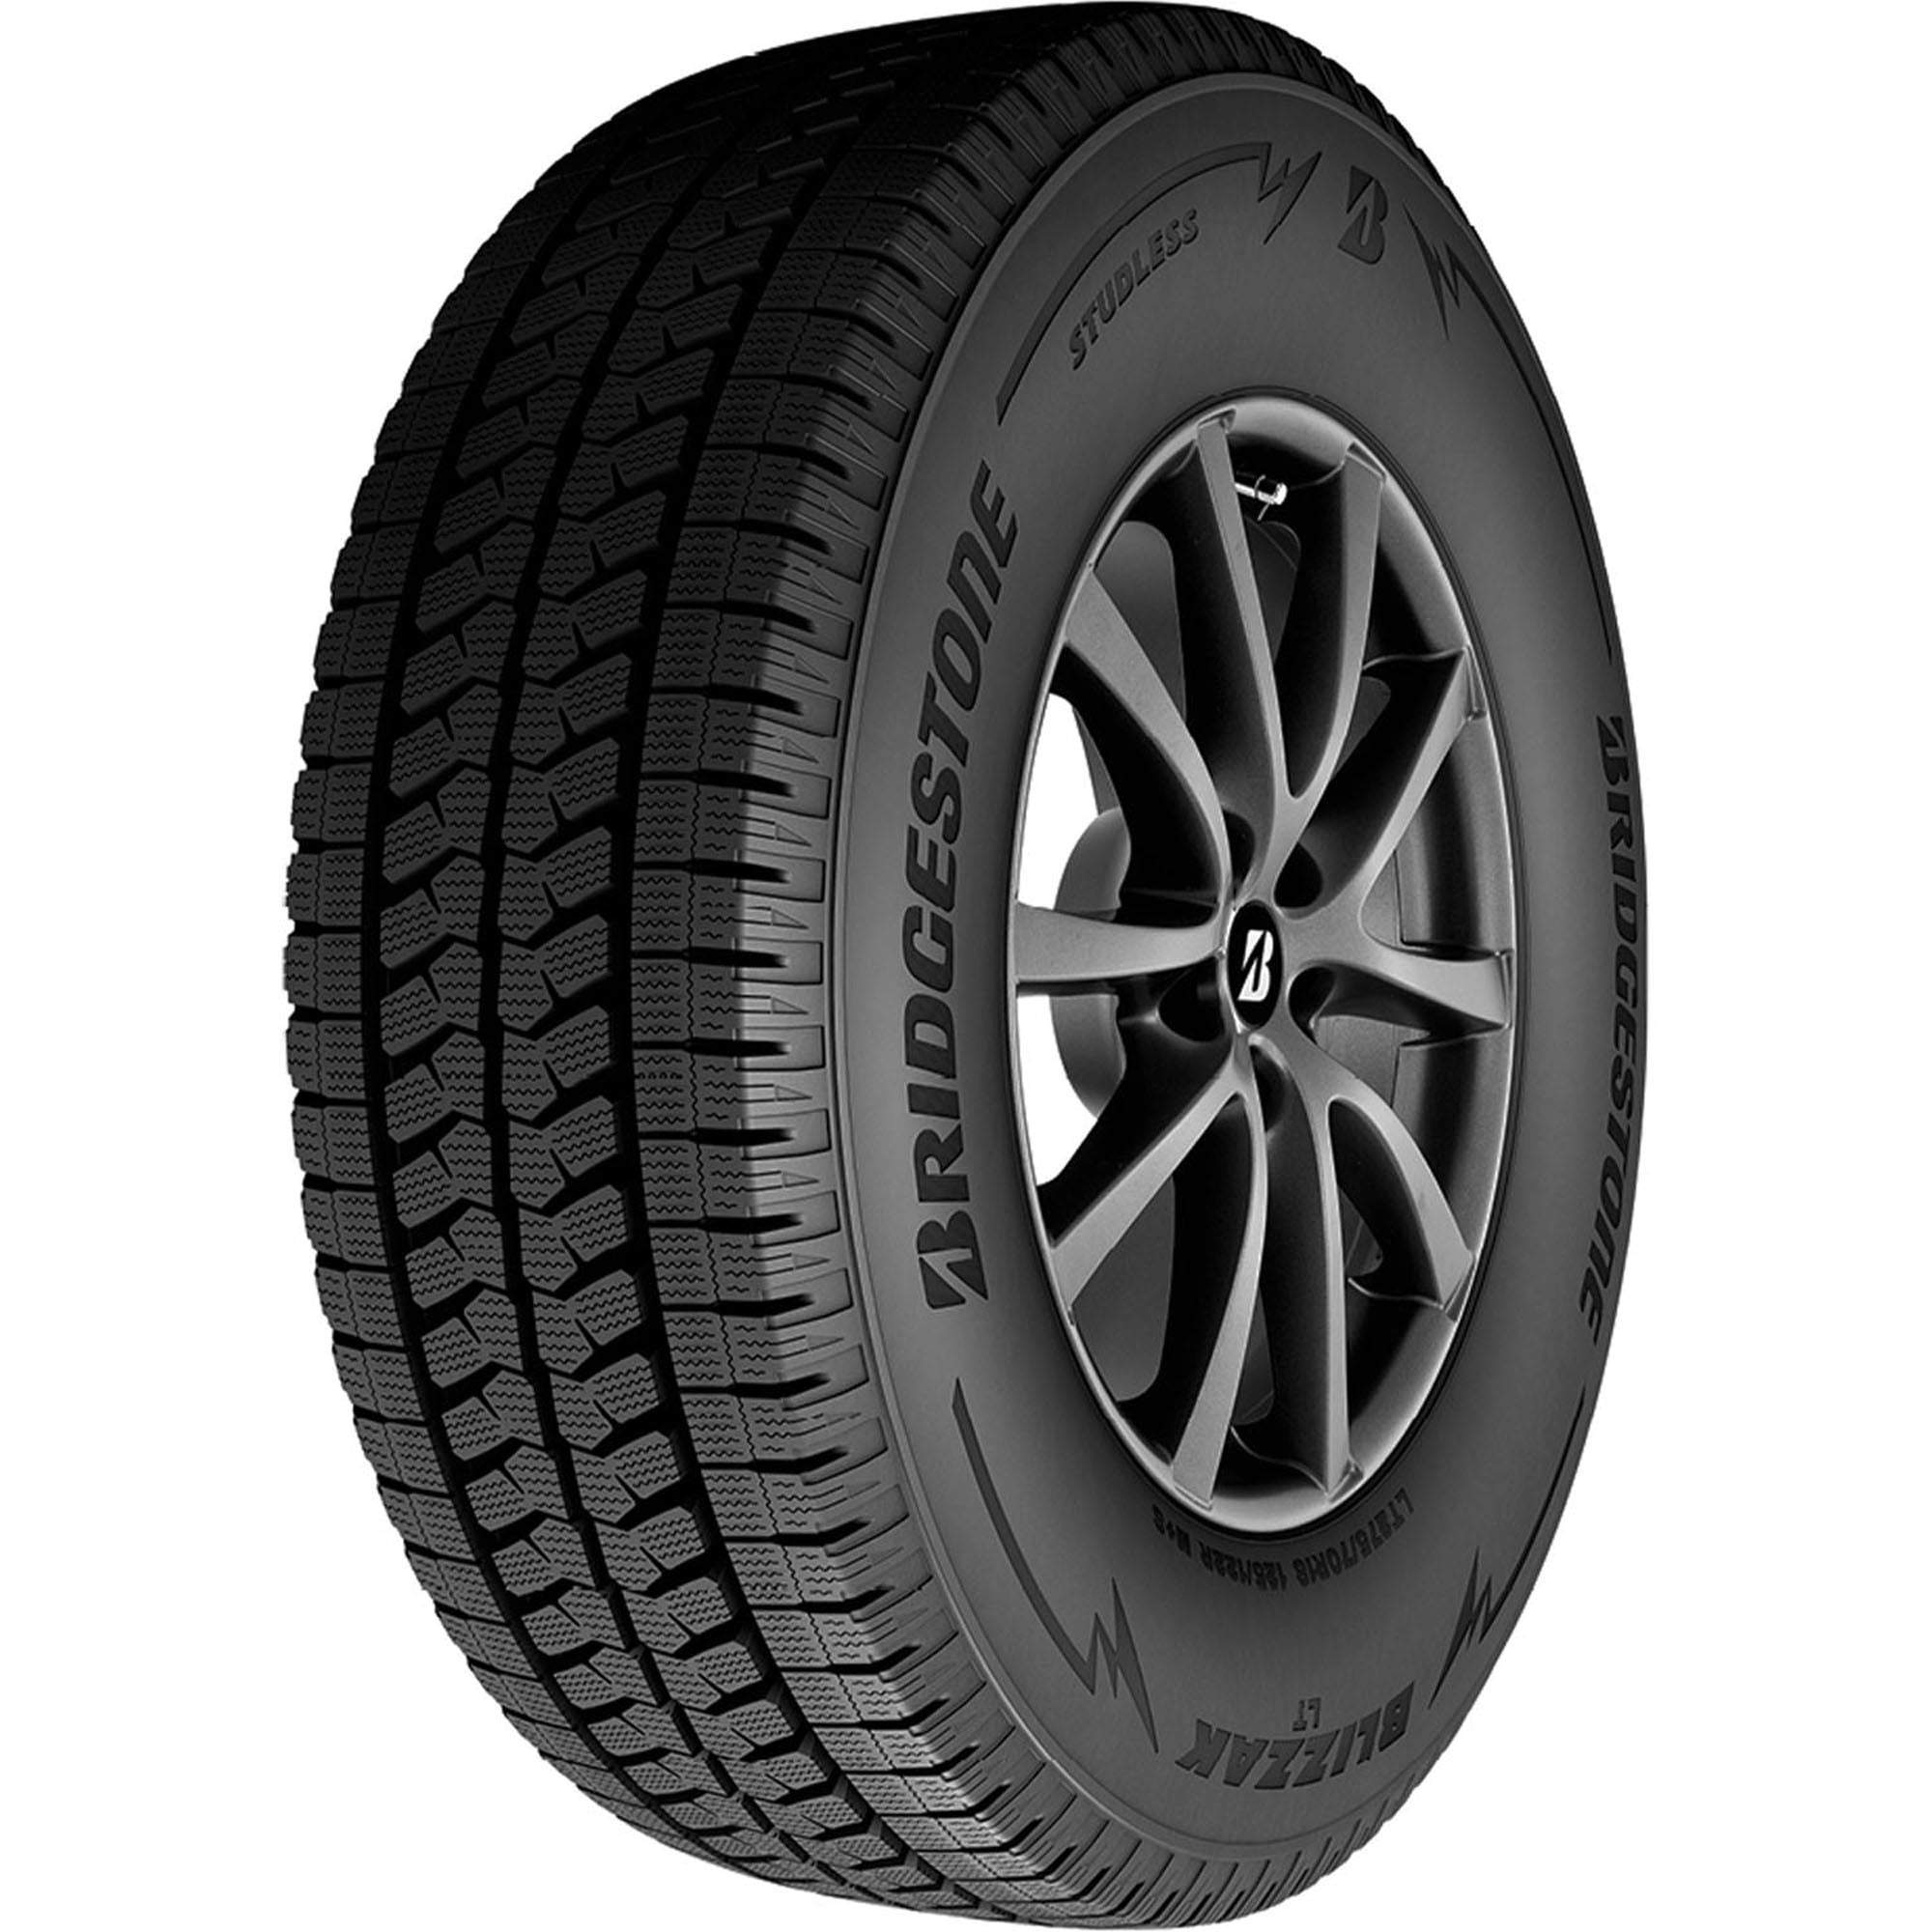 Bridgestone Blizzak LT Winter LT265/70R17 121/118R E Light Truck Tire